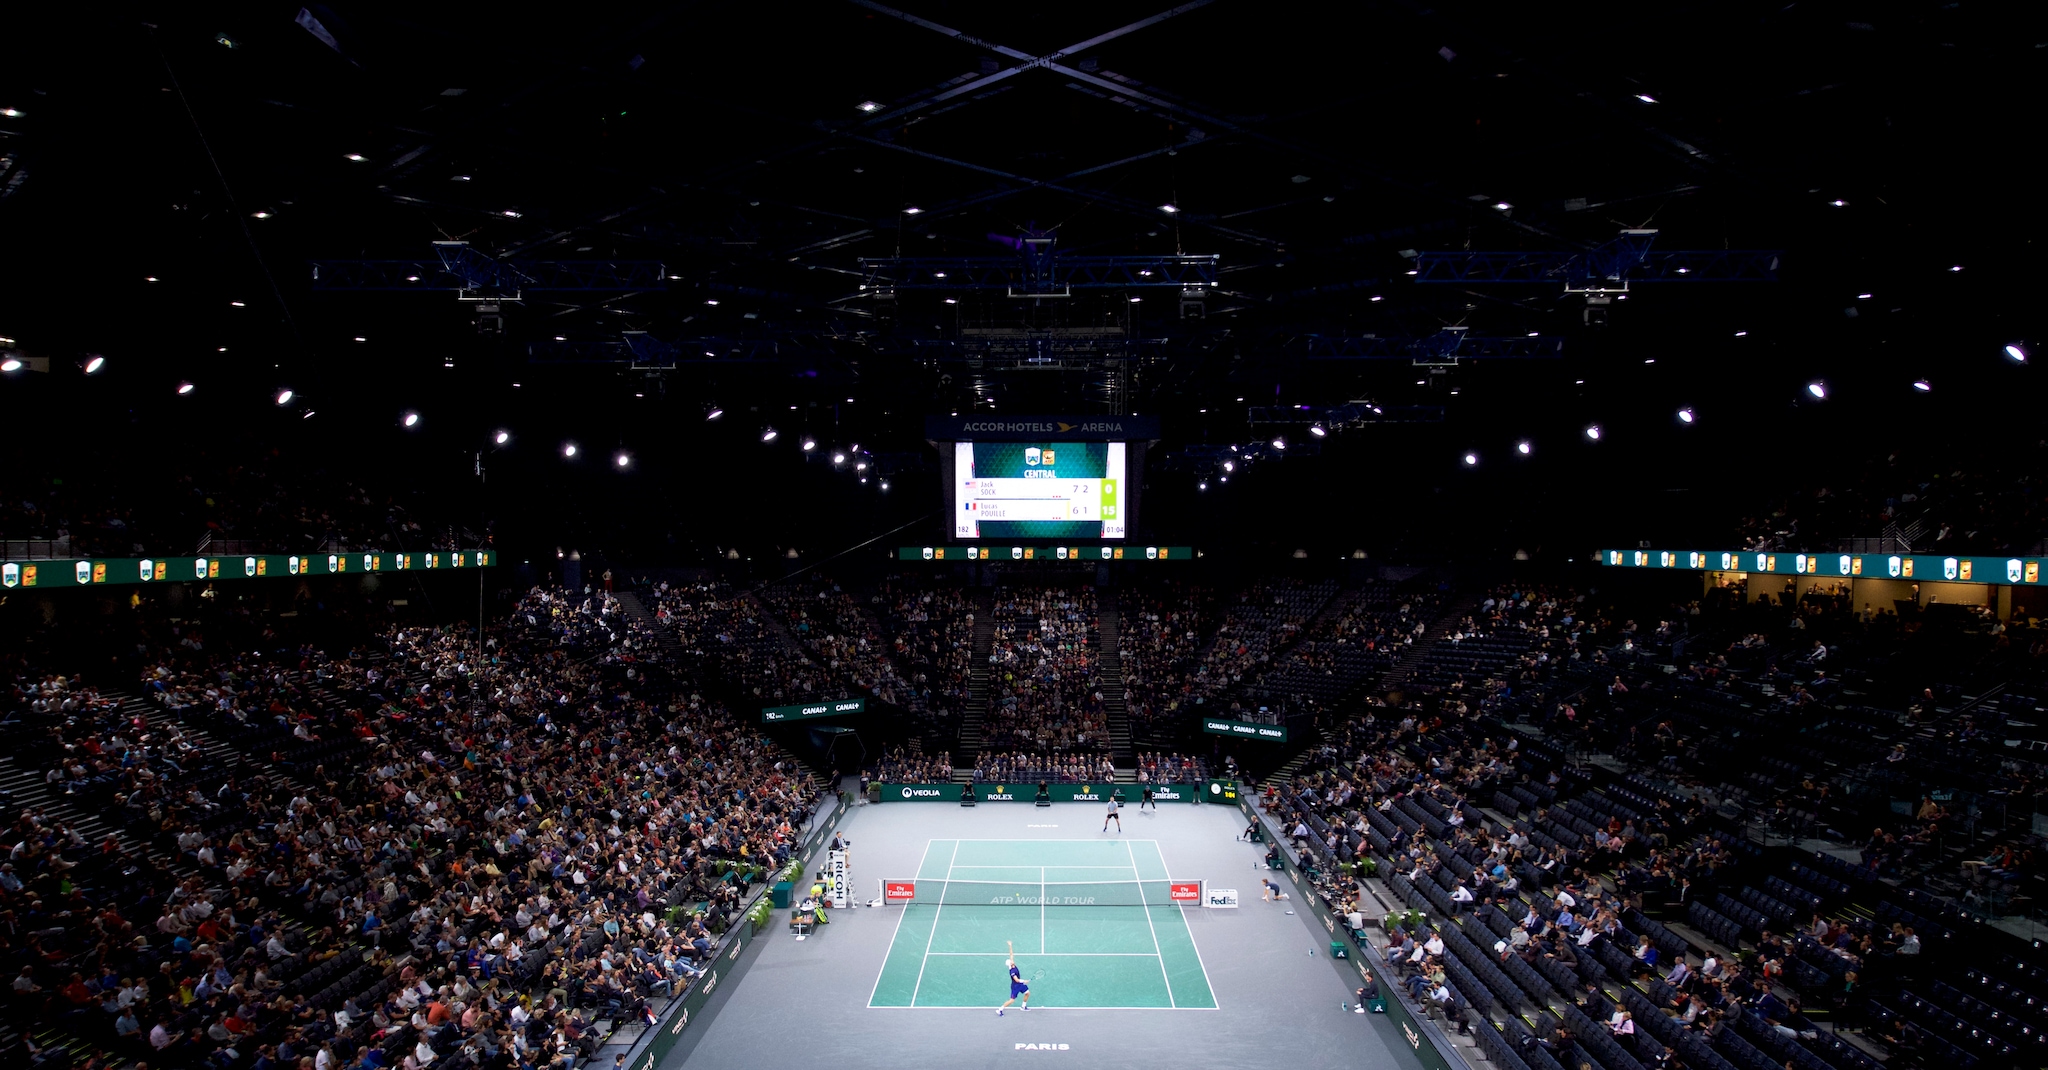 Paris 2022 | Rolex and Tennis | Newsroom